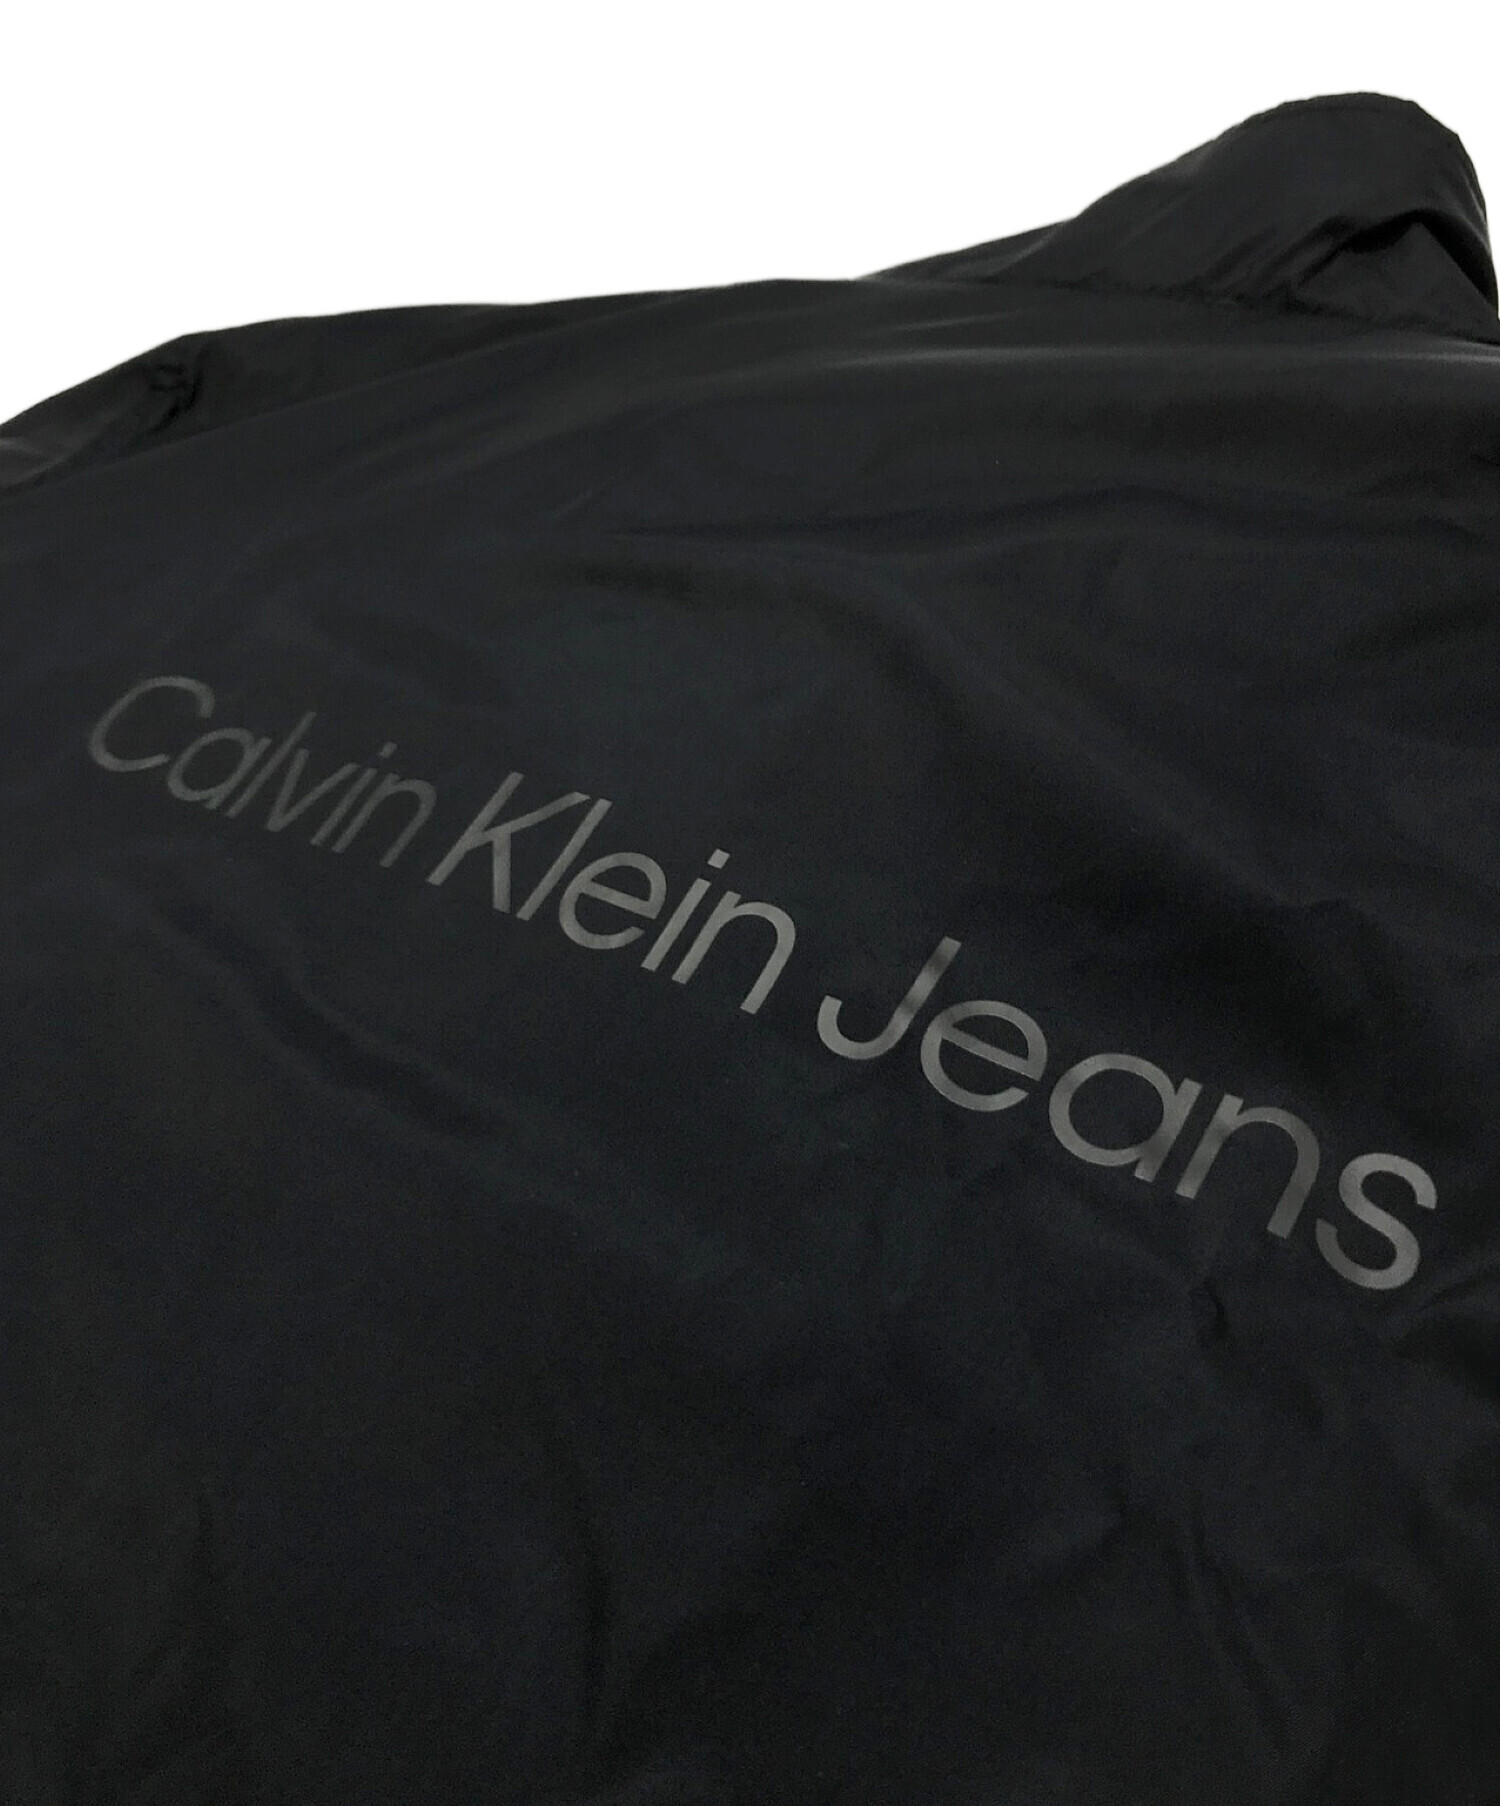 Calvin Klein Jeans (カルバンクラインジーンズ) ジップジャケット ブラック サイズ:M 未使用品